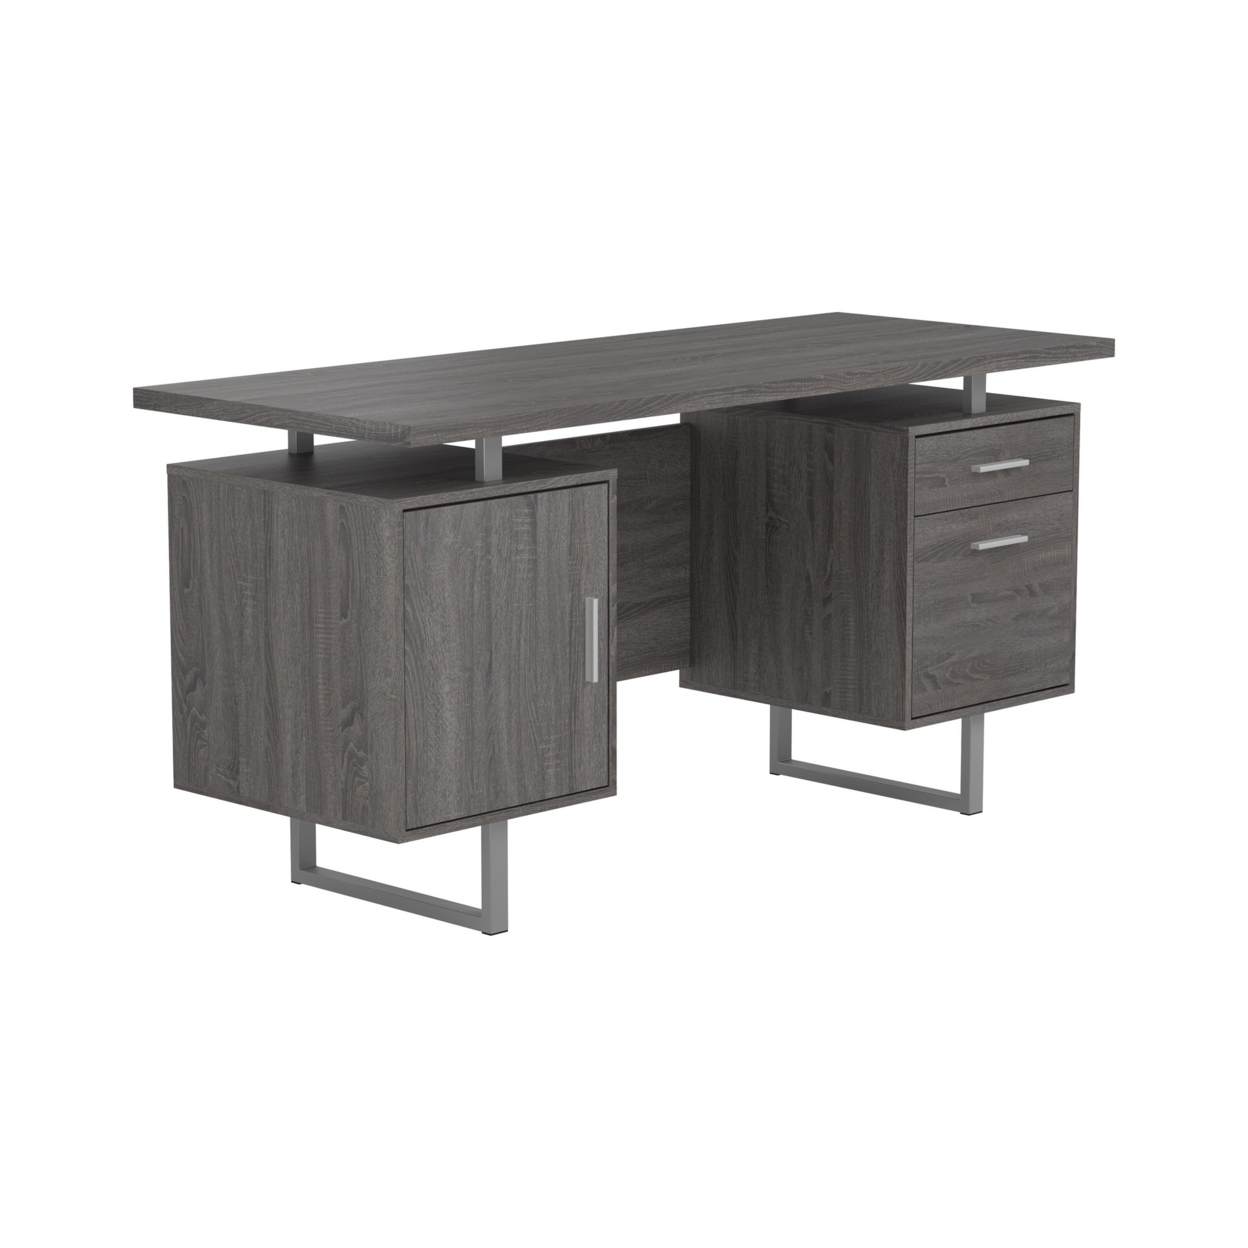 Wooden Office Desk With 1 Drawer And 1 Door Cabinet, Gray- Saltoro Sherpi